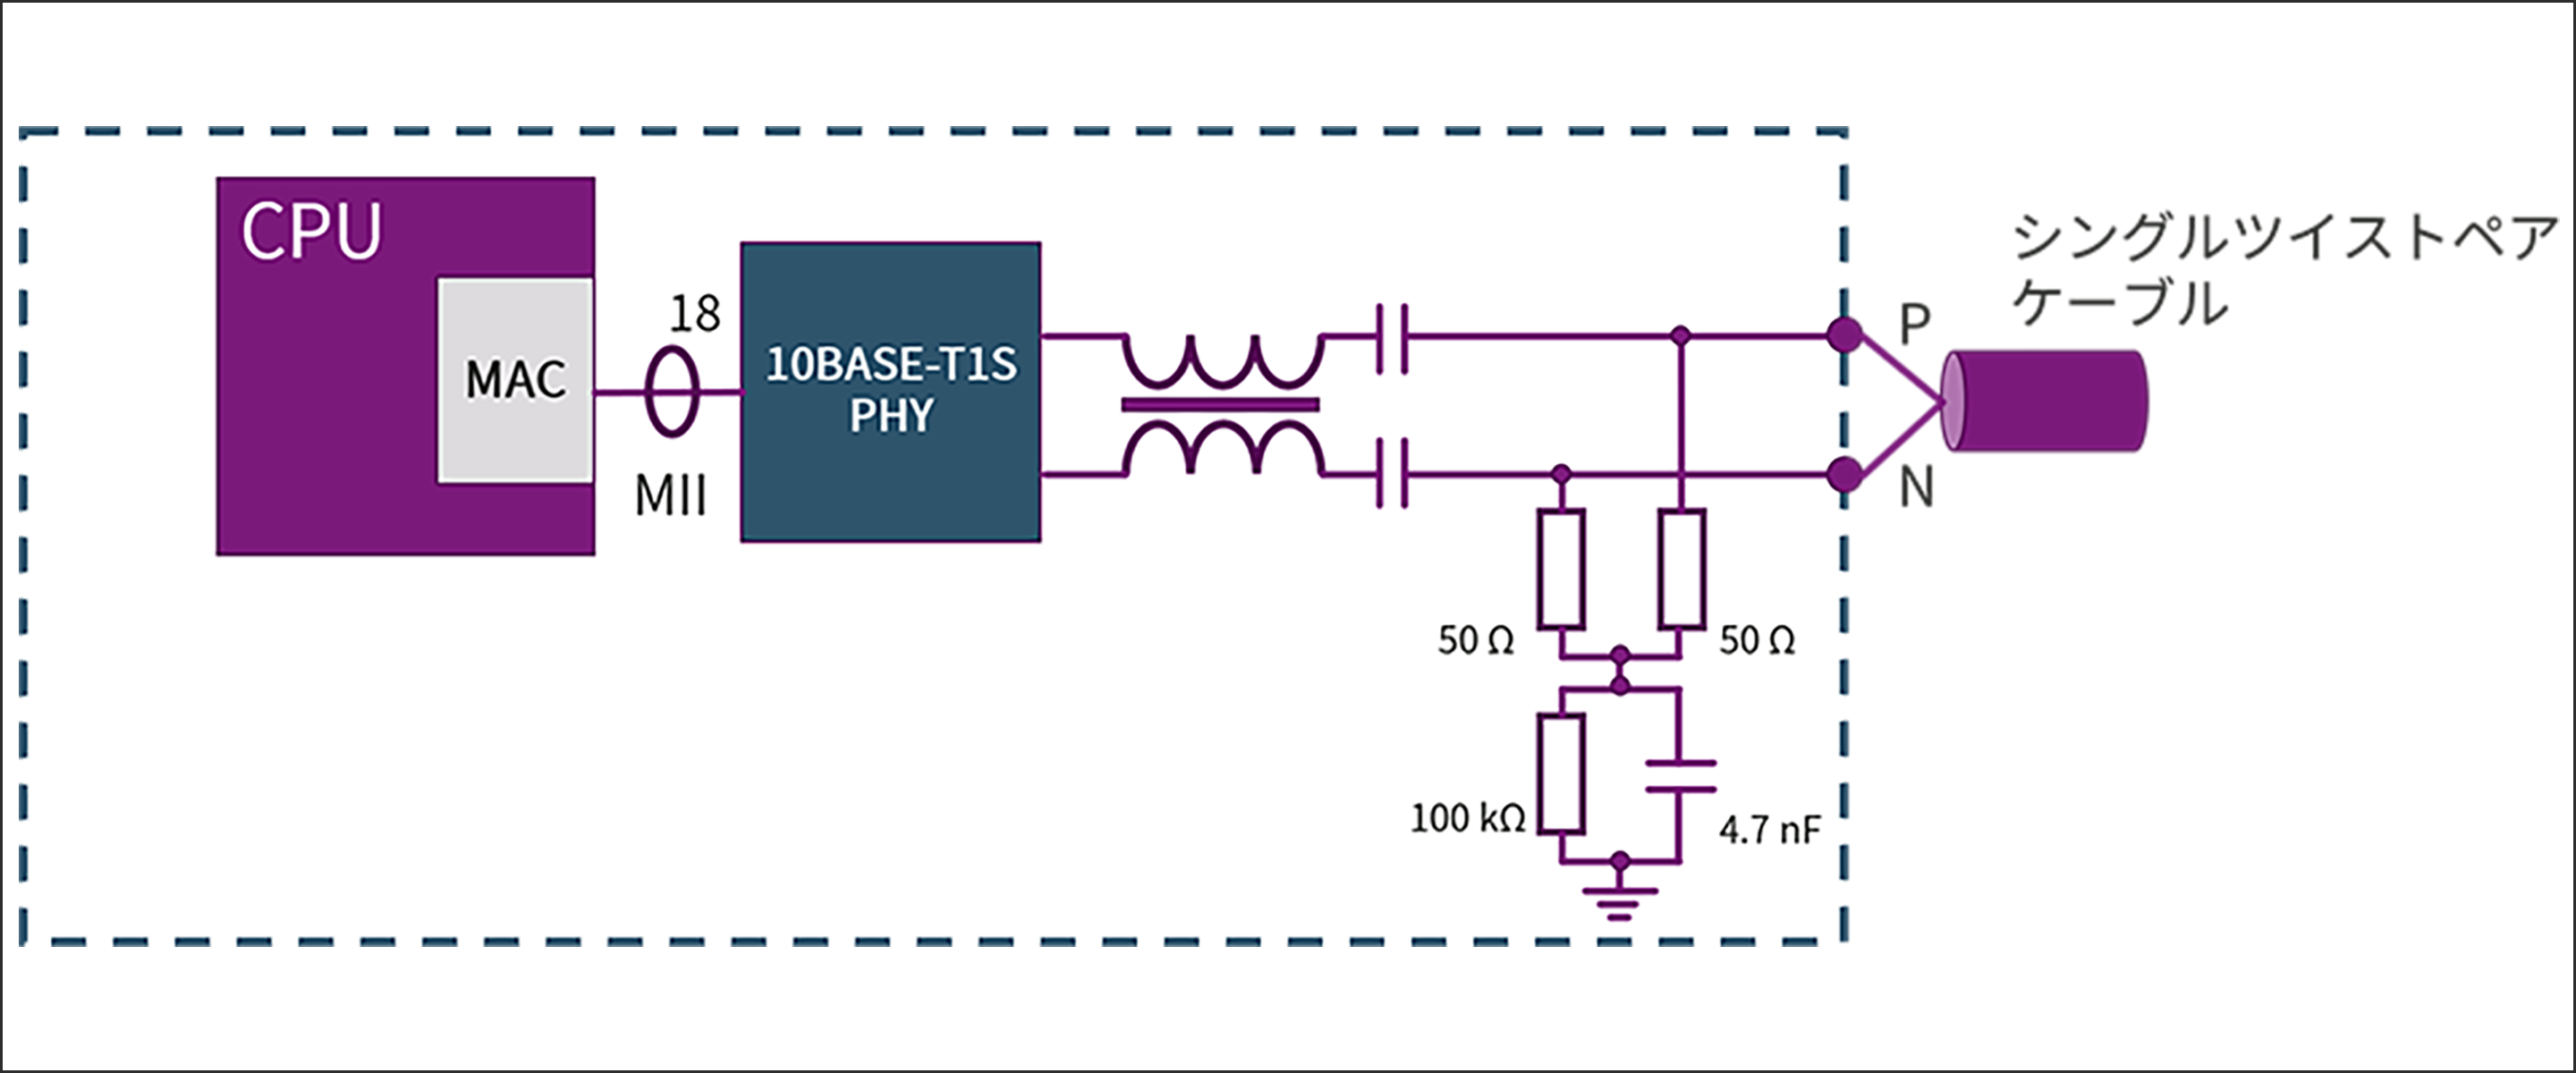 10BASE-T1S PHY + MAC搭載CPU接続構成例